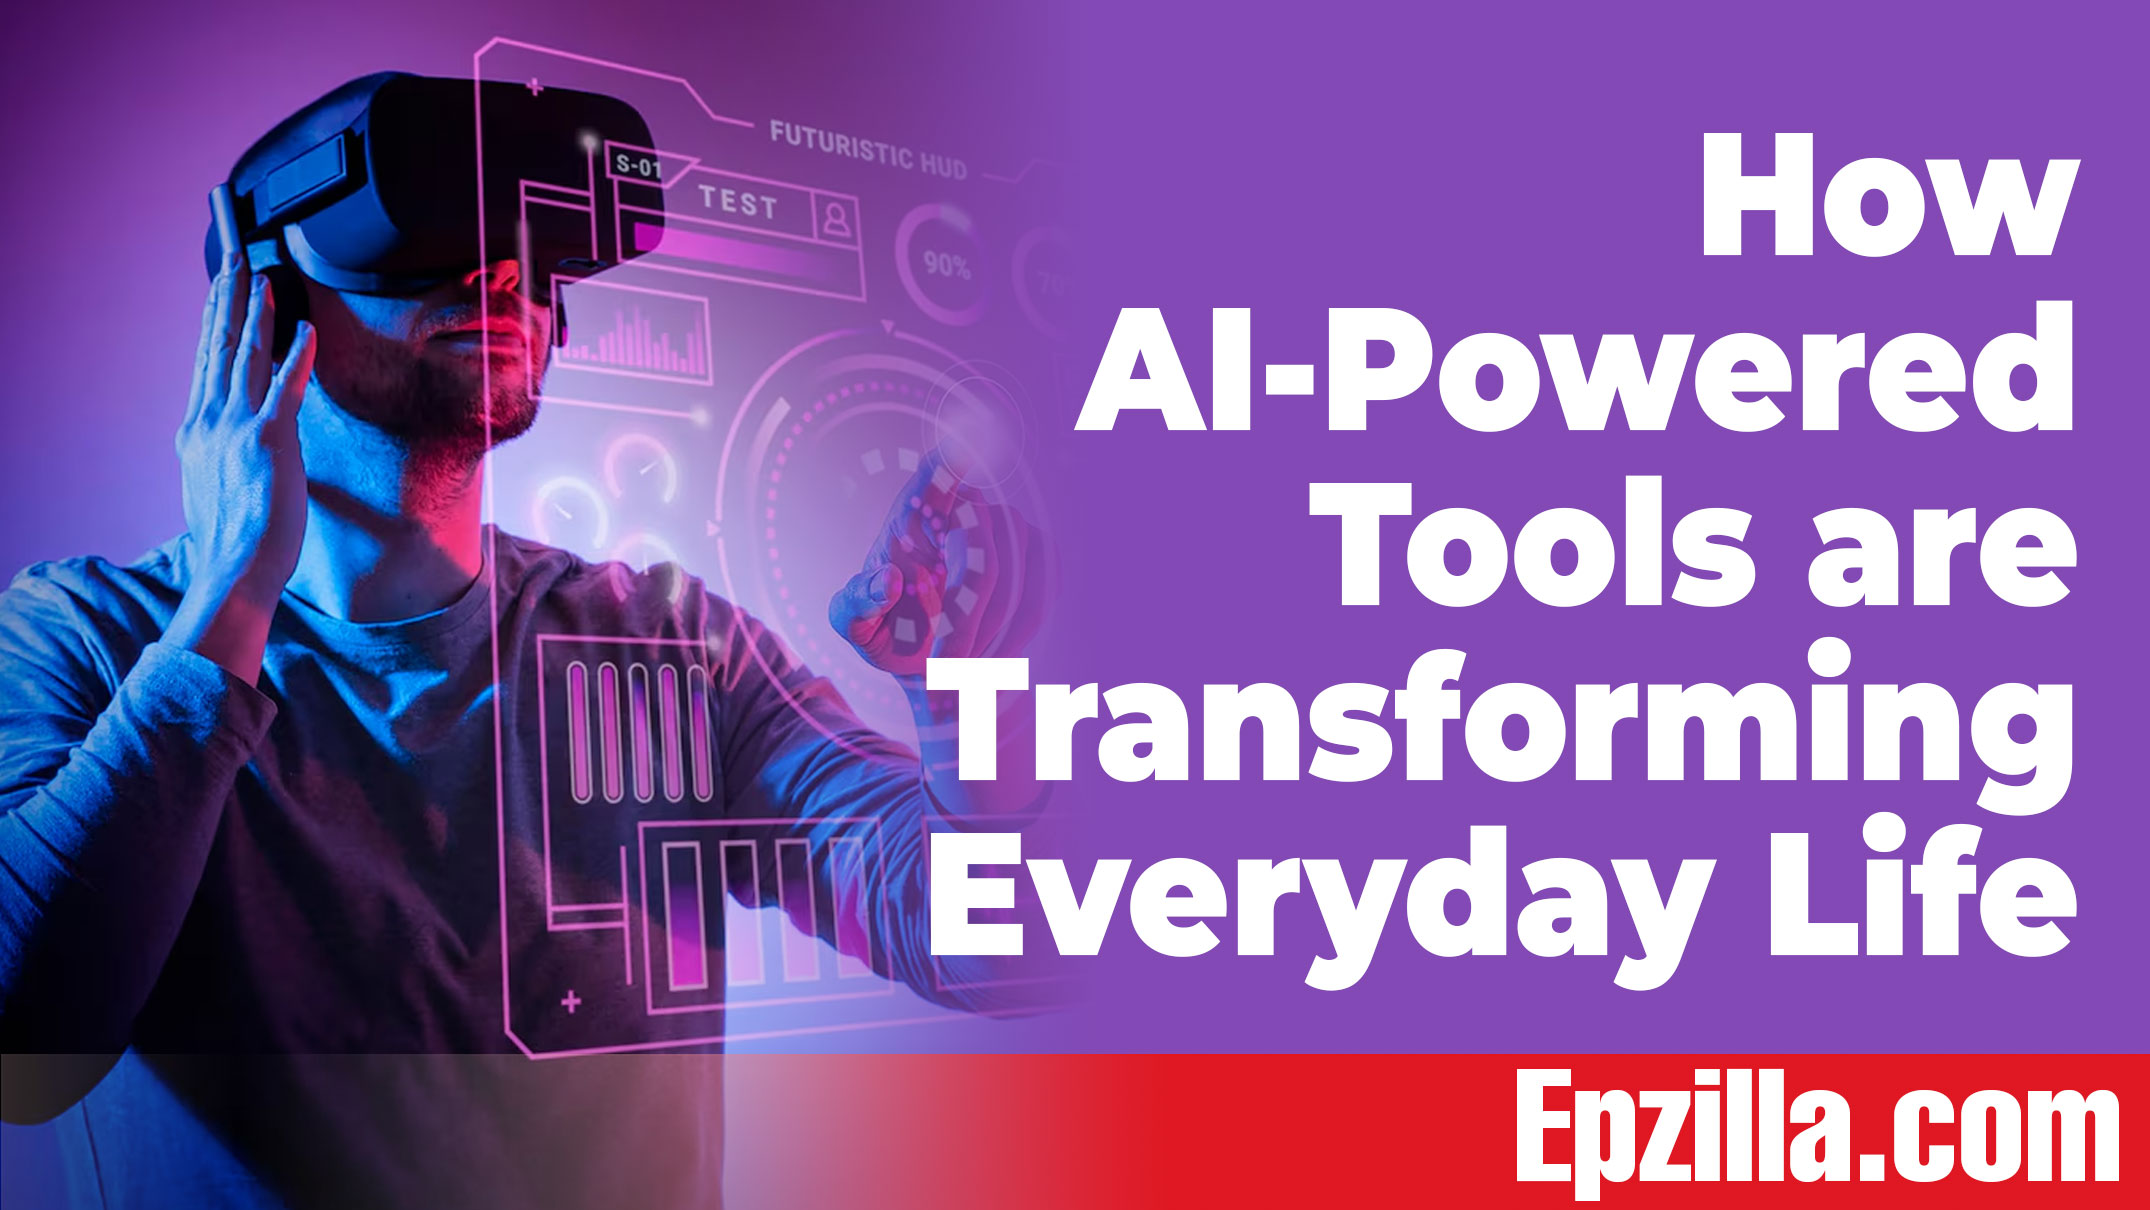 How AI-Powered Tools are Transforming Everyday Life Epzilla.com